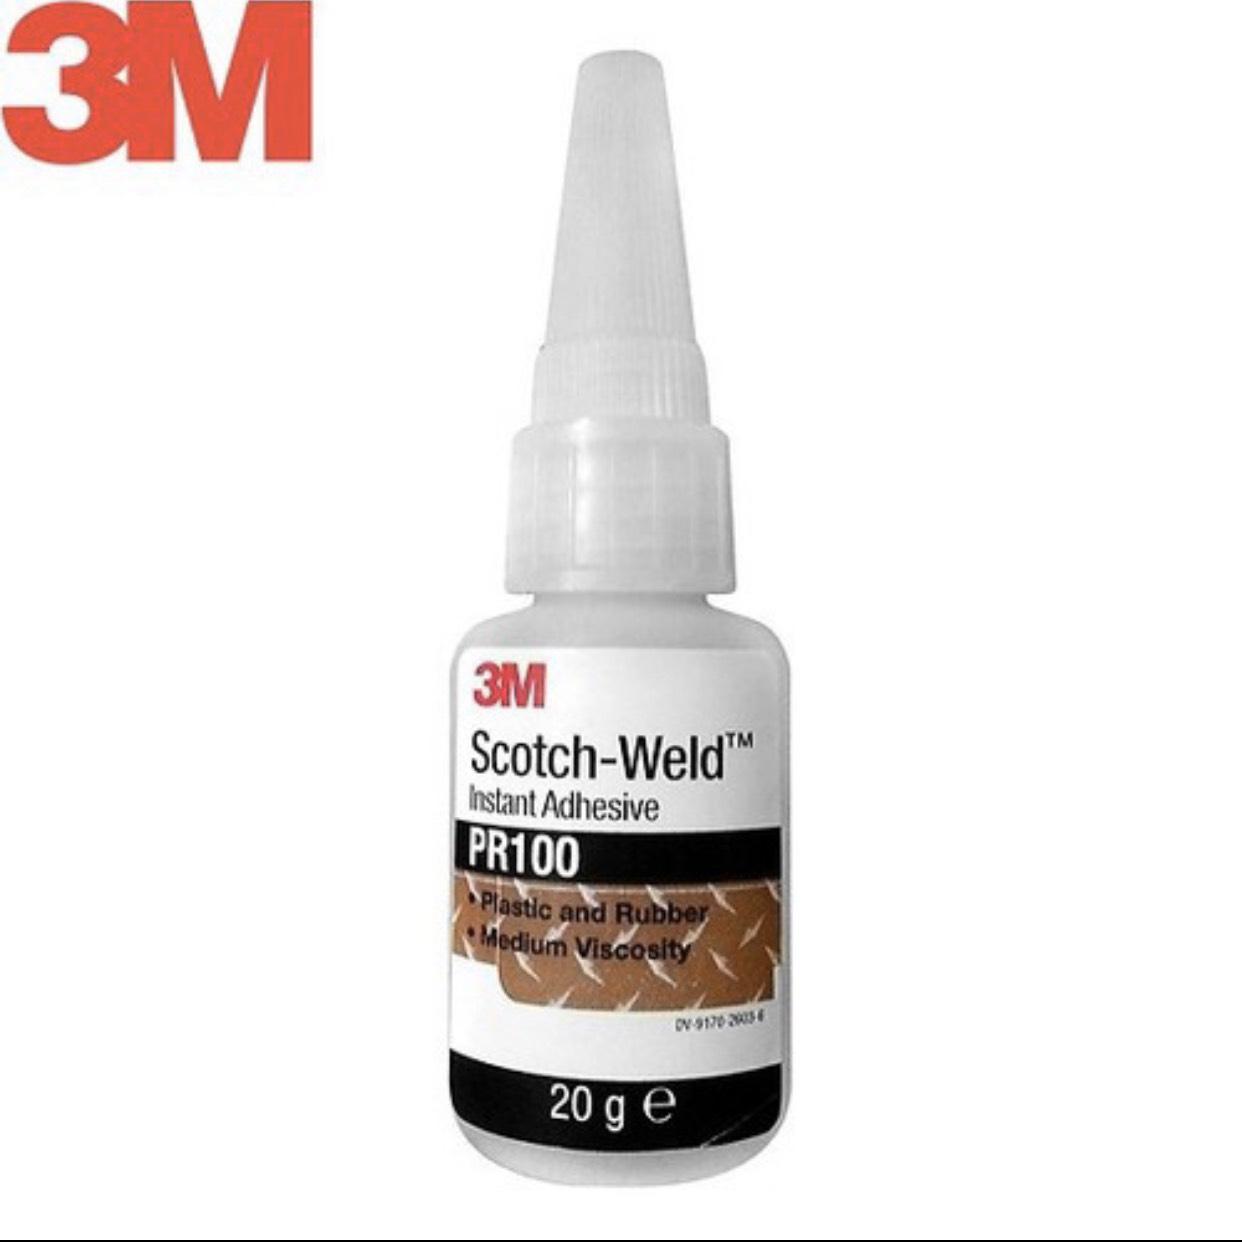 Scotch-Weld rigid Epoxy dp270clear two-part epoxy adhesive